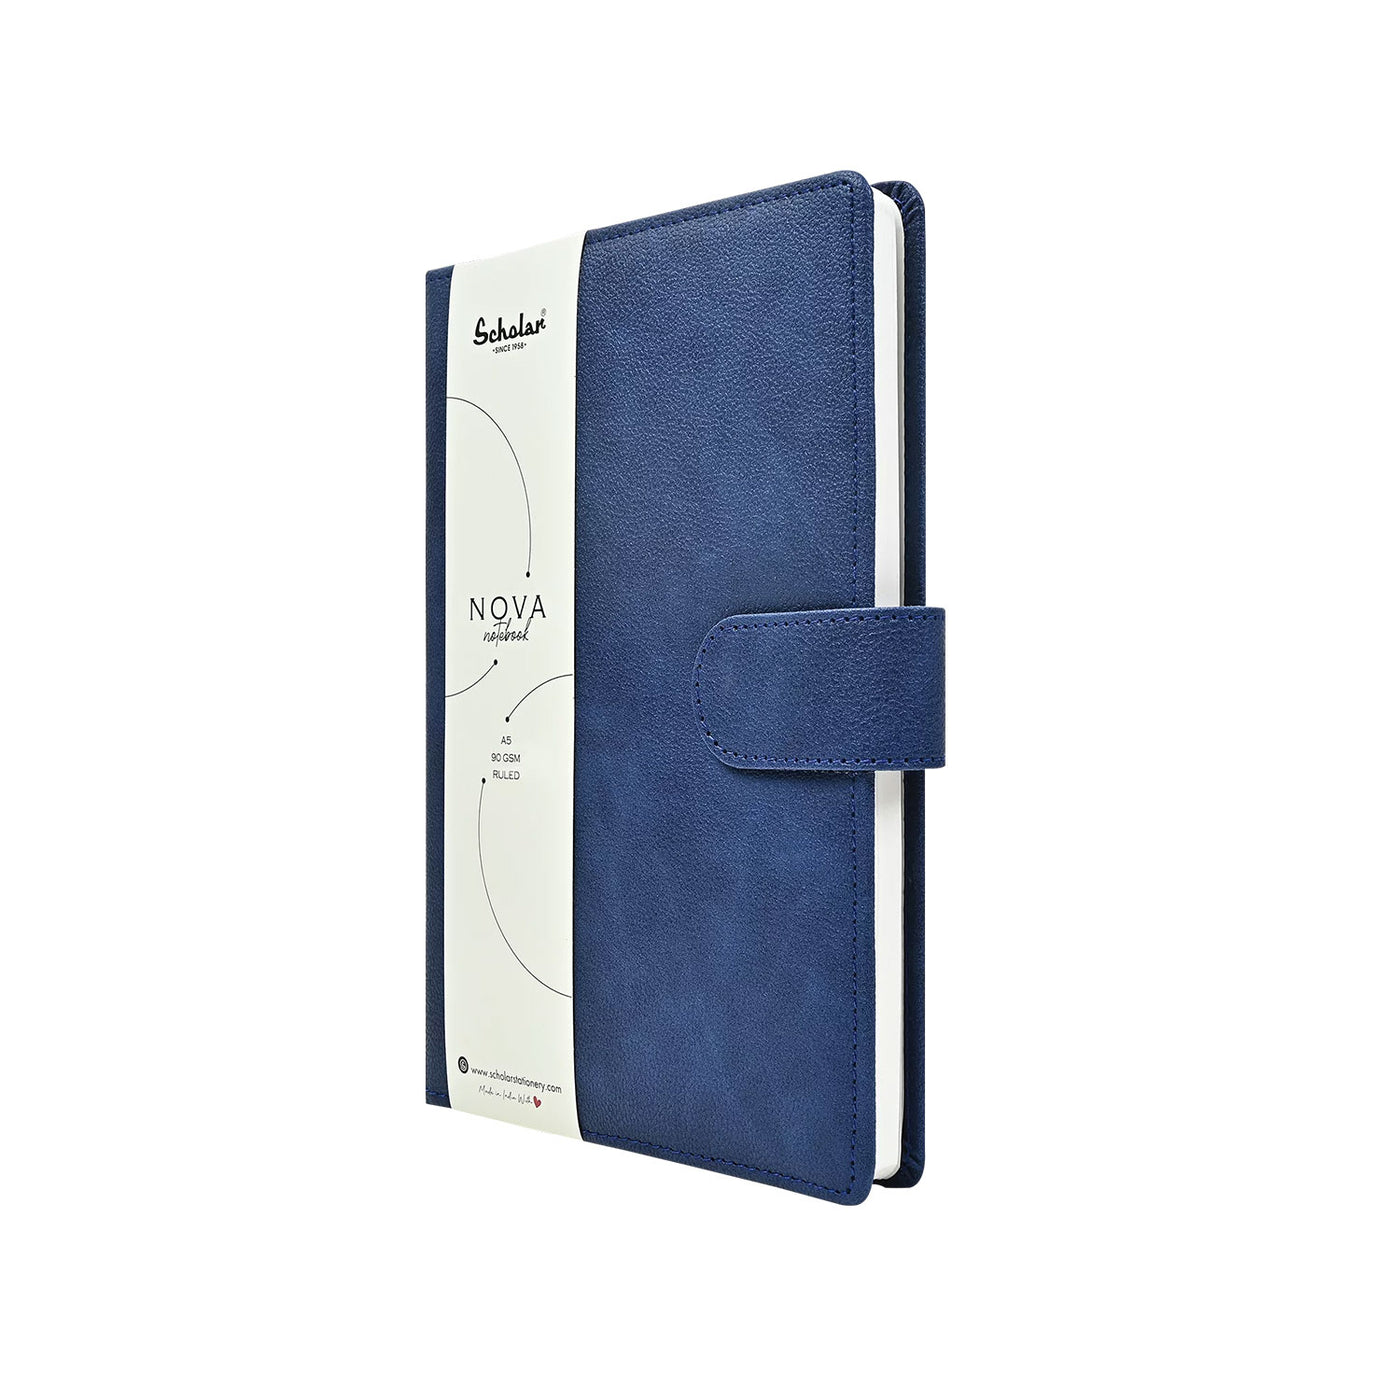 Scholar Nova Blue Notebook - A5 Ruled 2